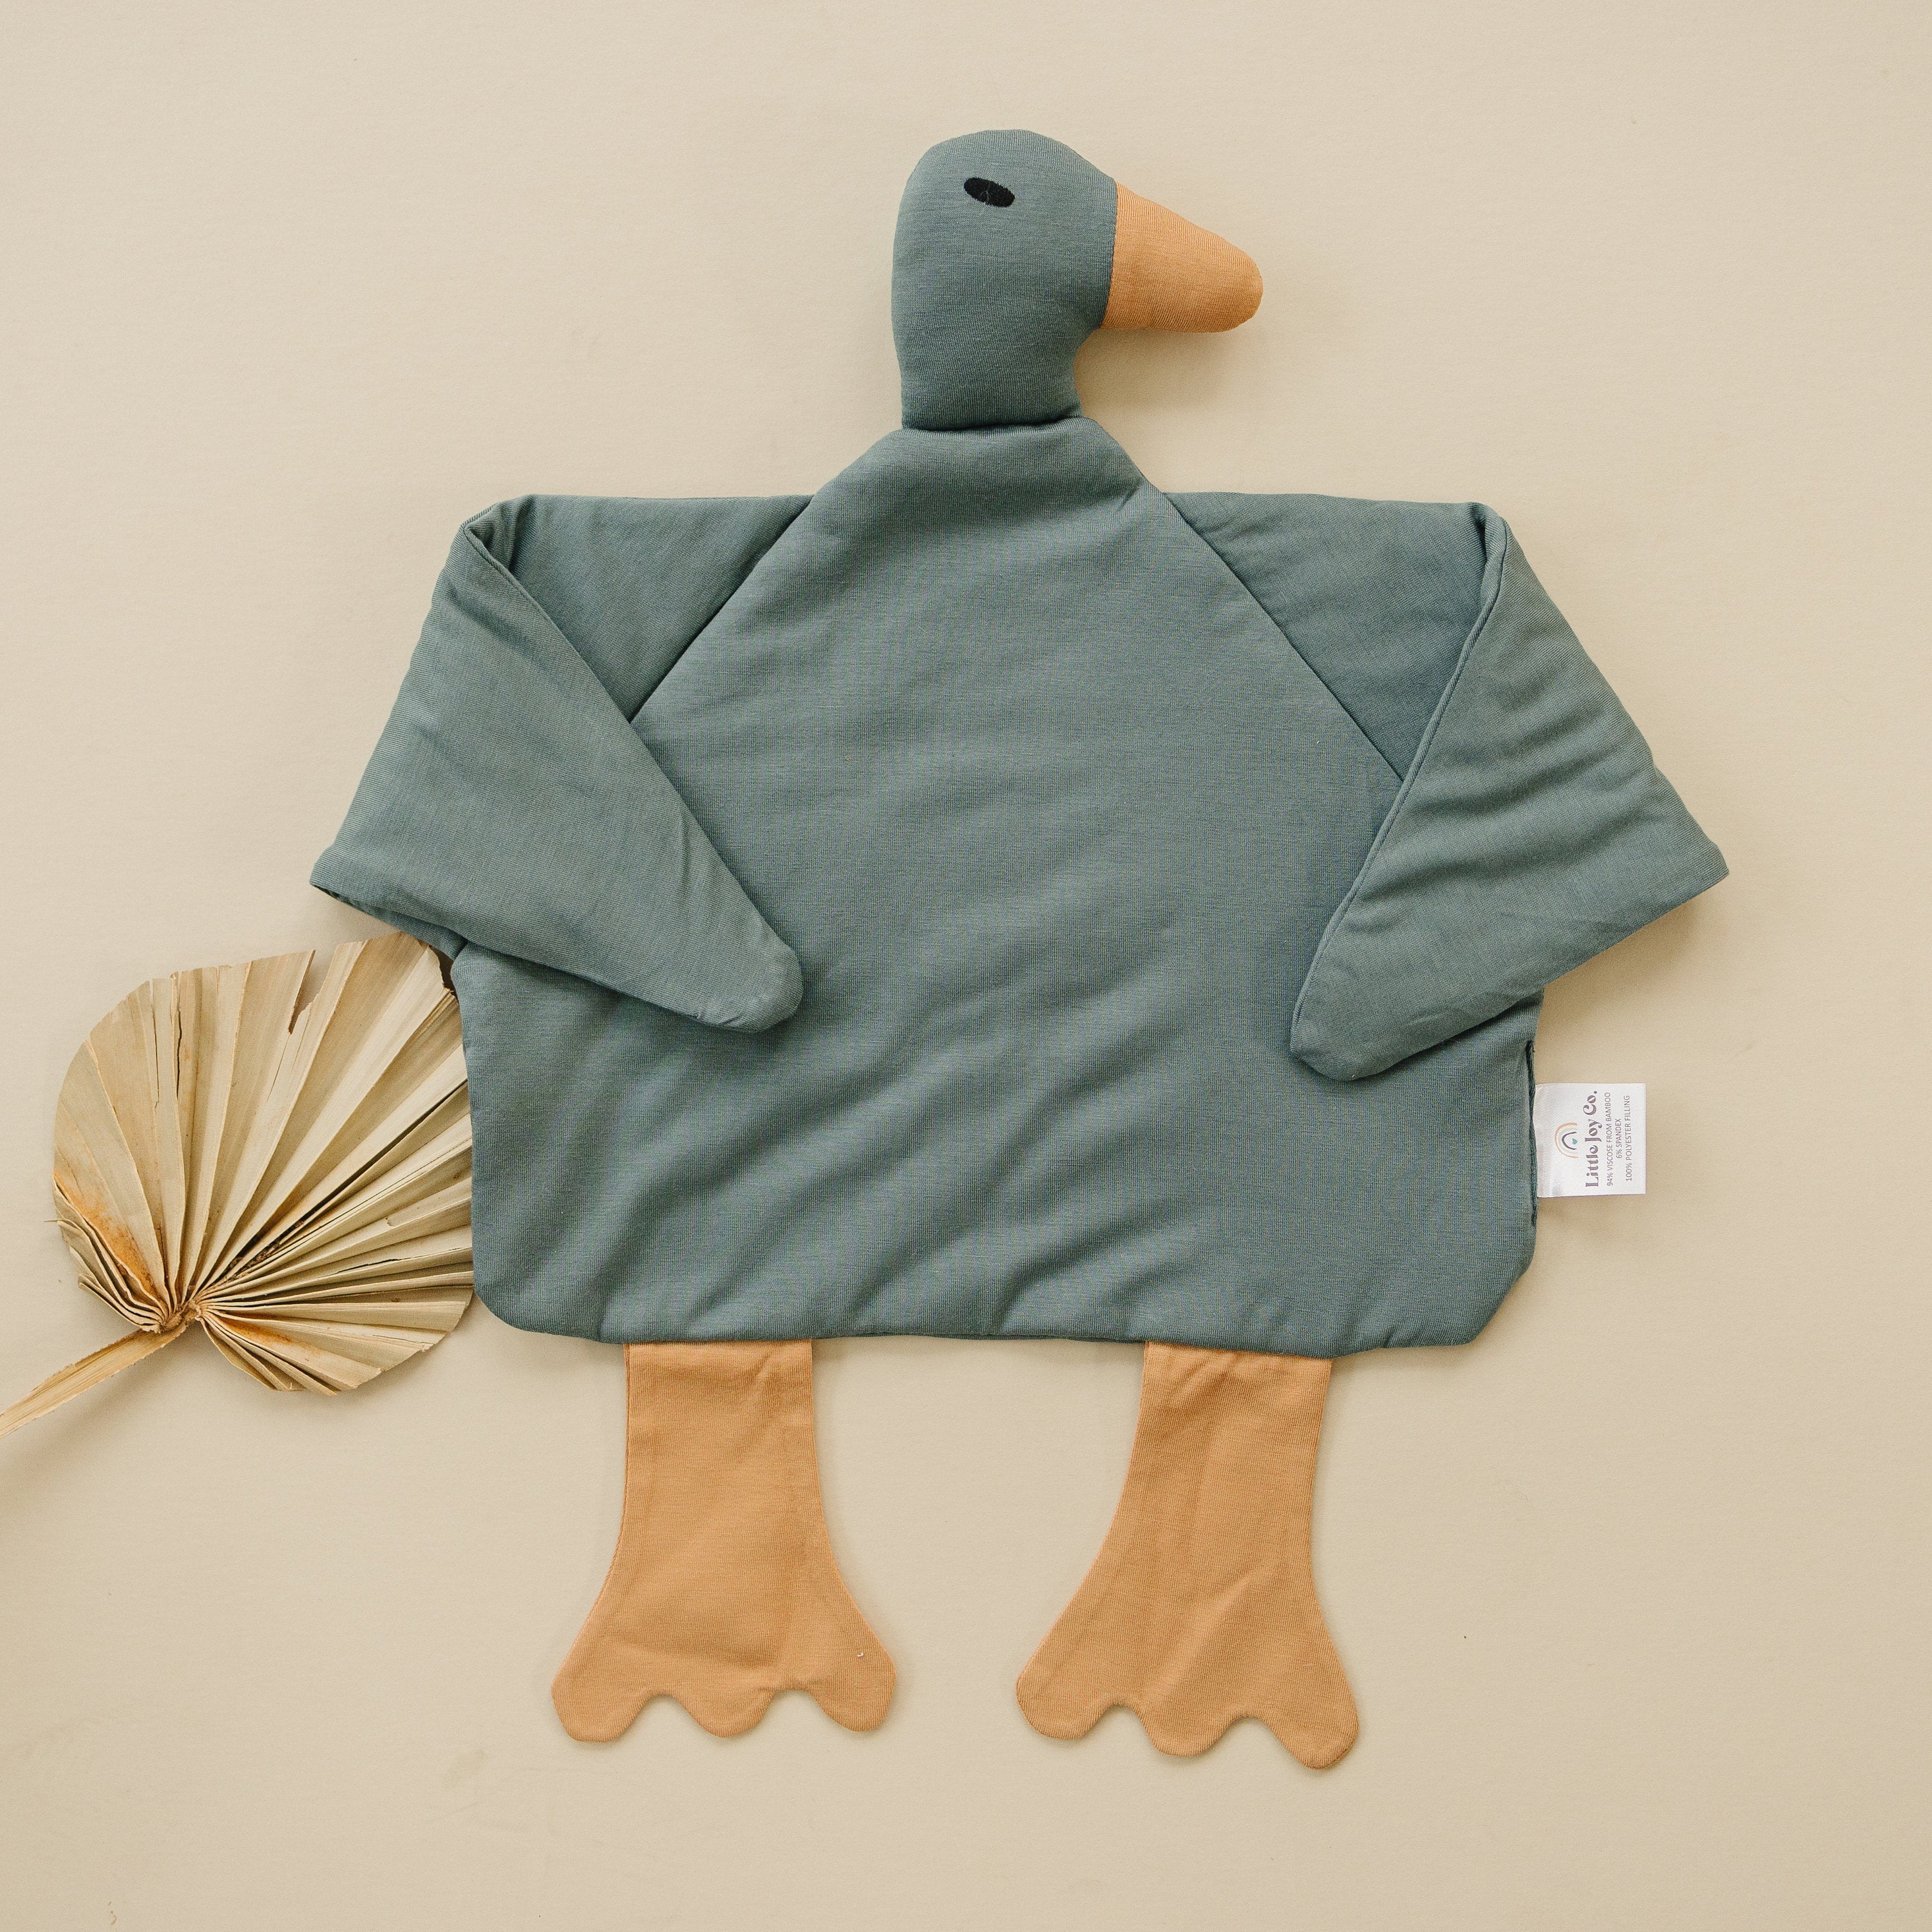 XL Bamboo Duck Lovey Blanket - Bamboo Lovey - Security Blanket - Mallard Duck - Teal Green - Boy Girl Neutral - Baby Shower Gift Duckling